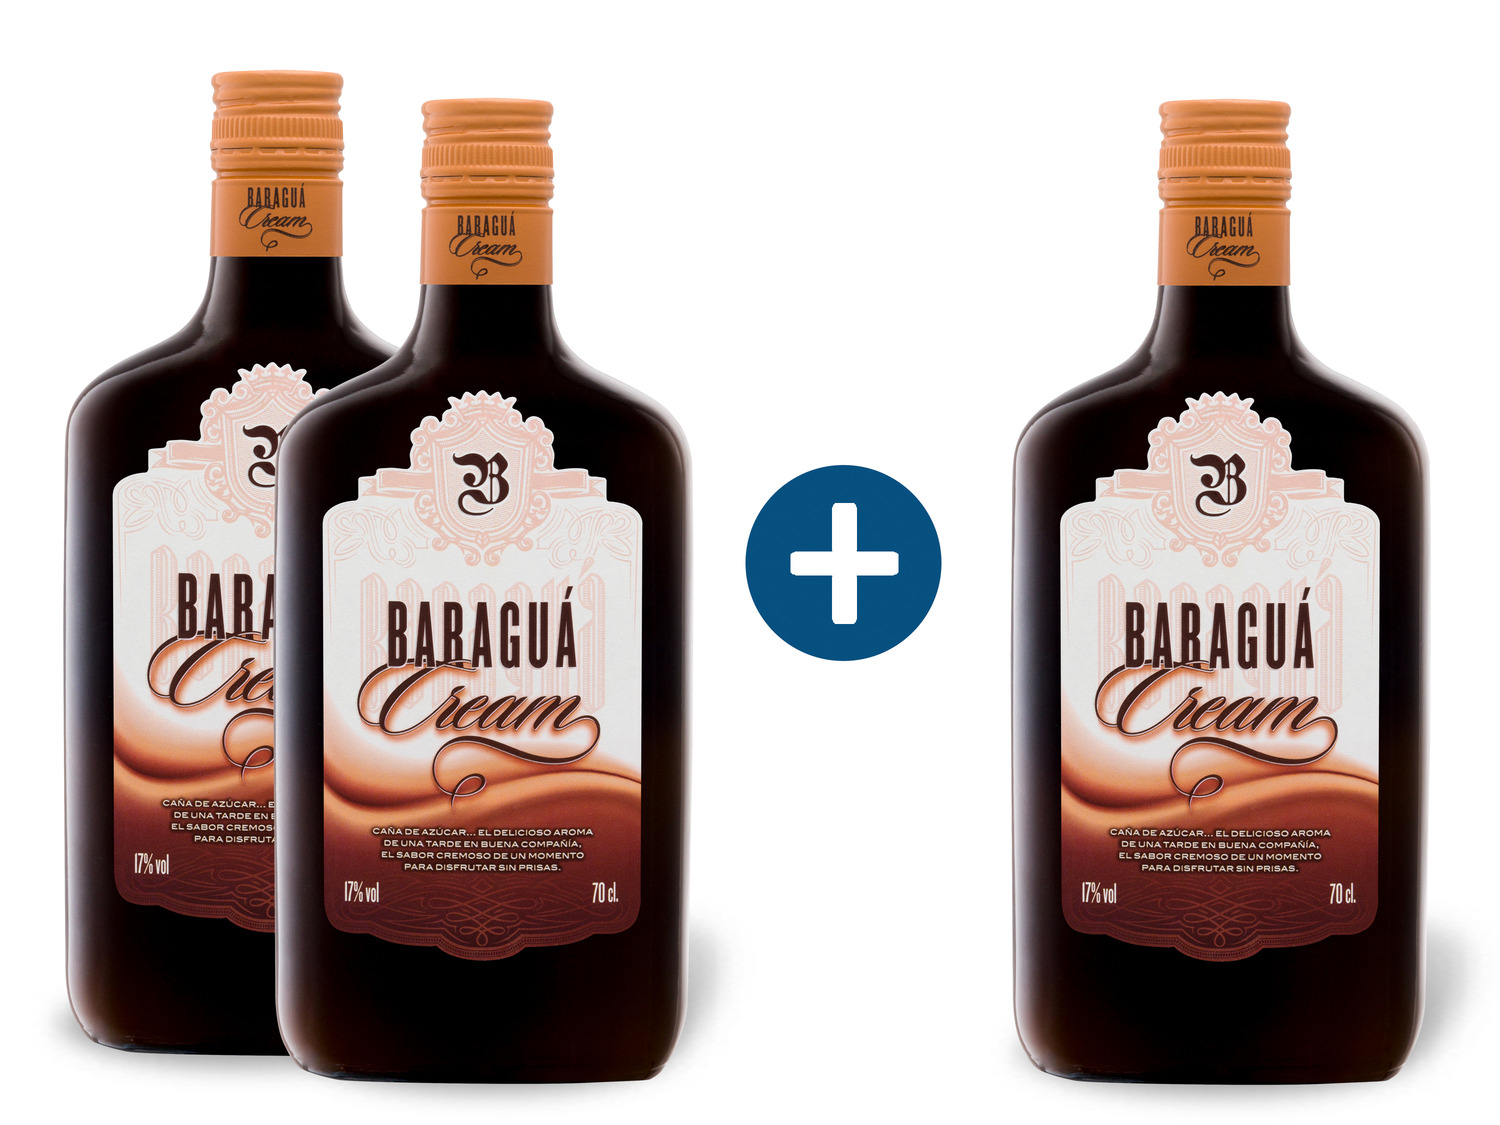 ᐉ 2+1 Paket Baraguá Cream Likör 17% Vol / DE / Price Compare - Lidl